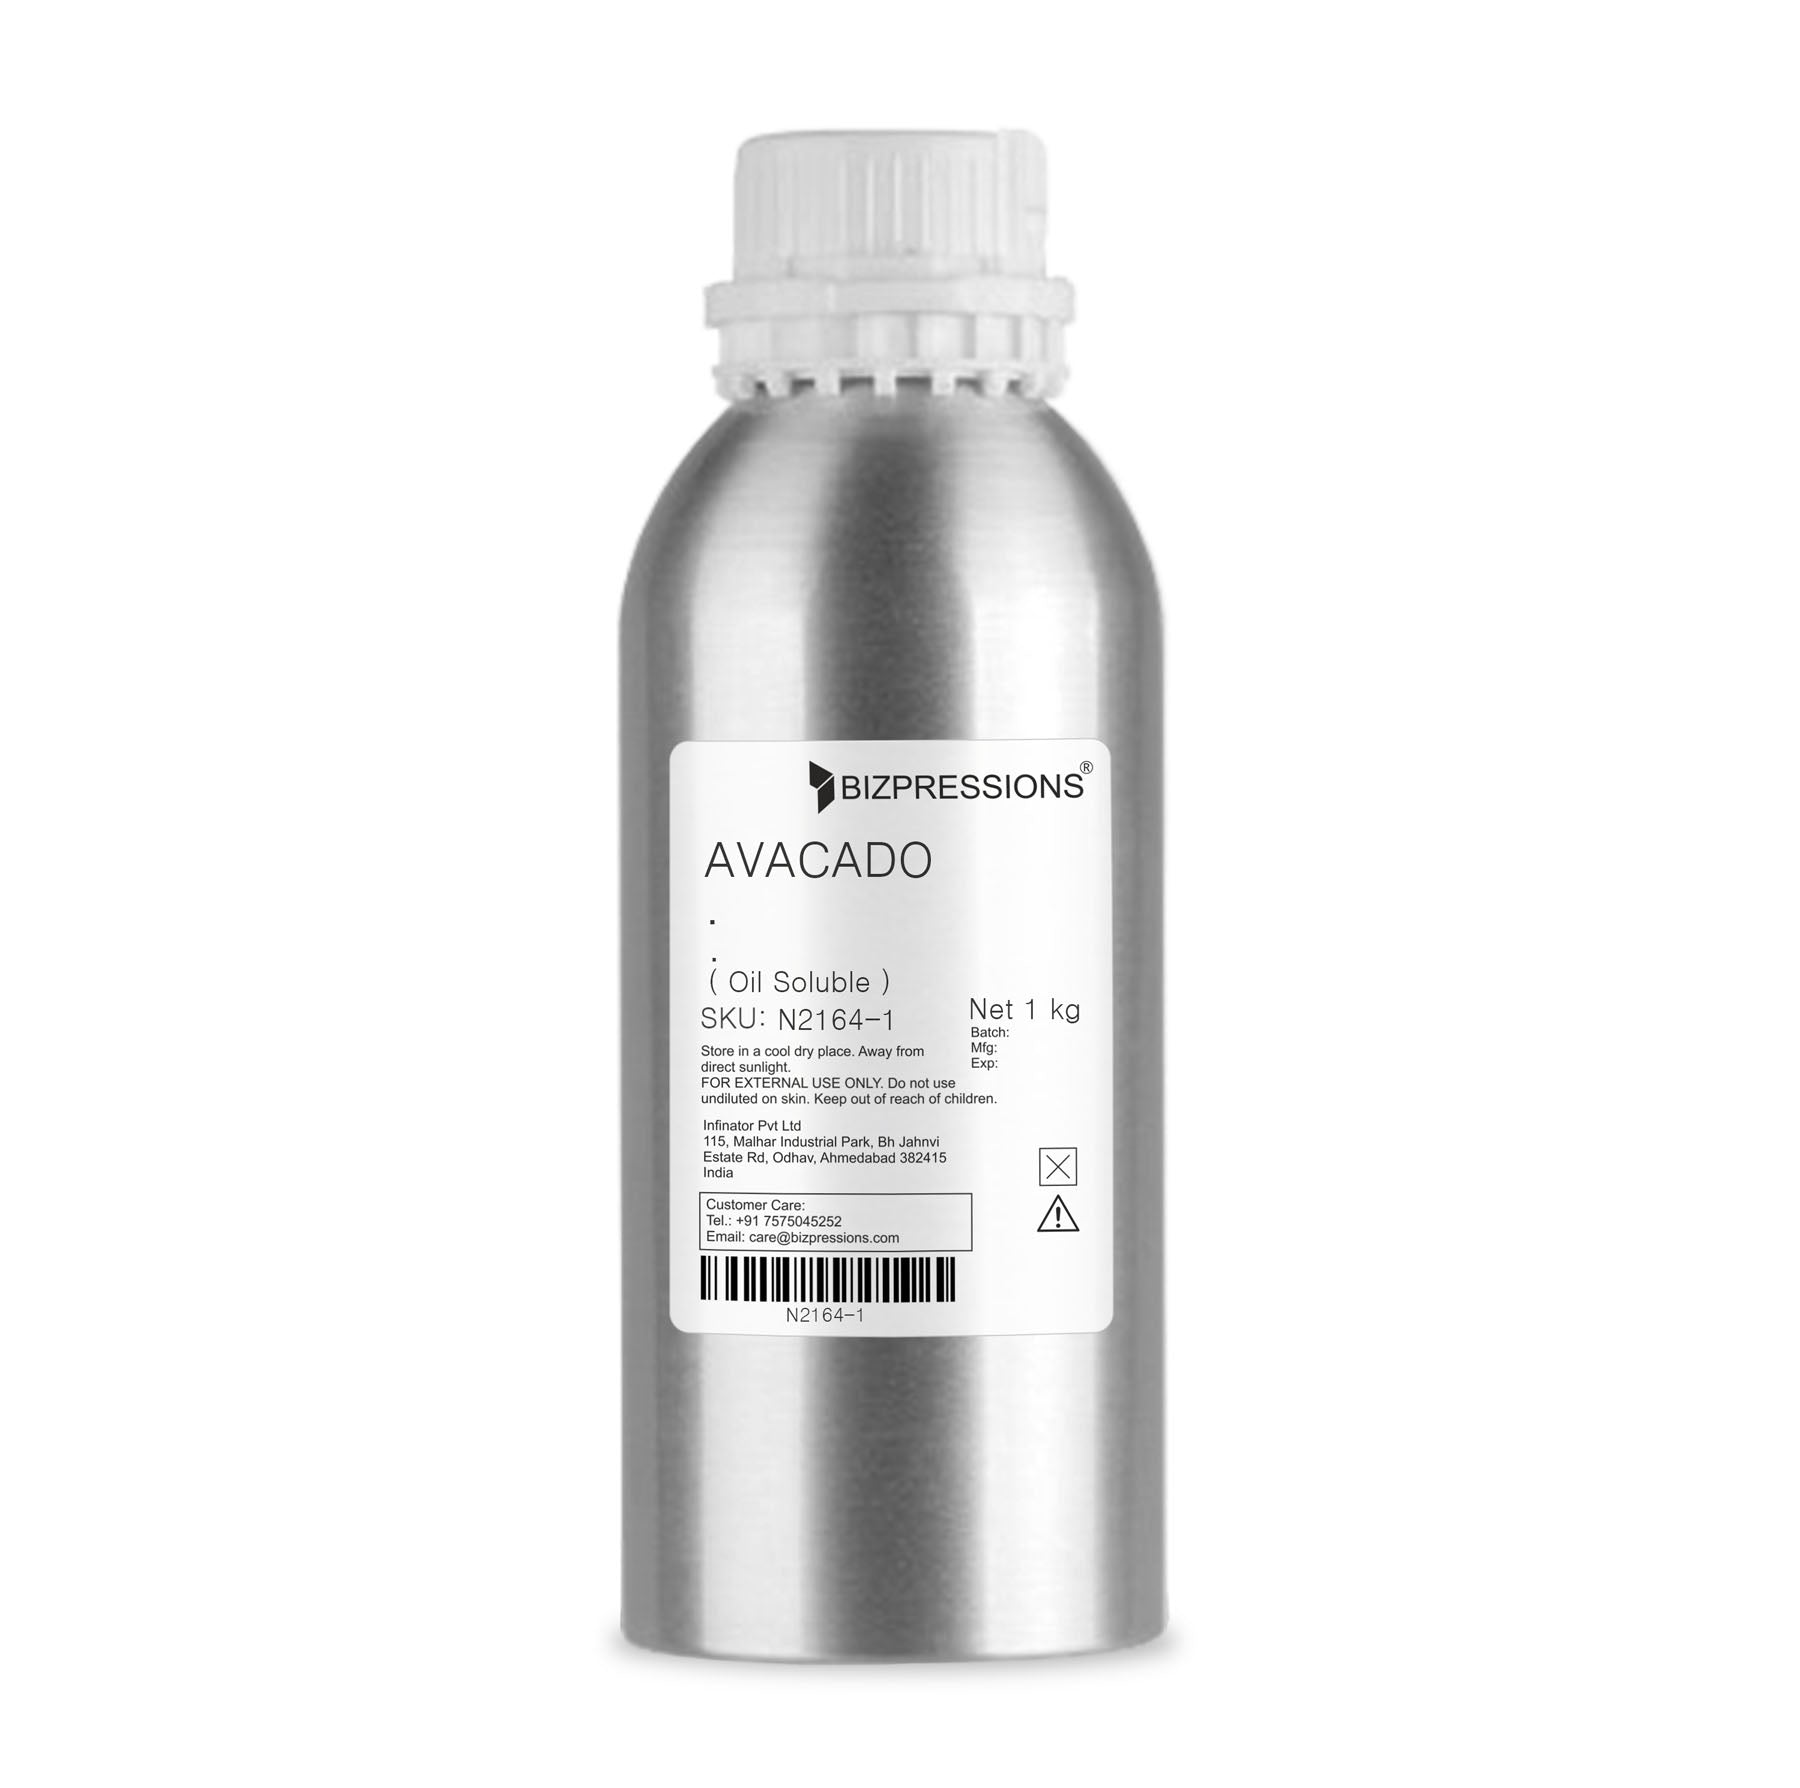 AVACADO - Fragrance ( Oil Soluble ) - 1 kg